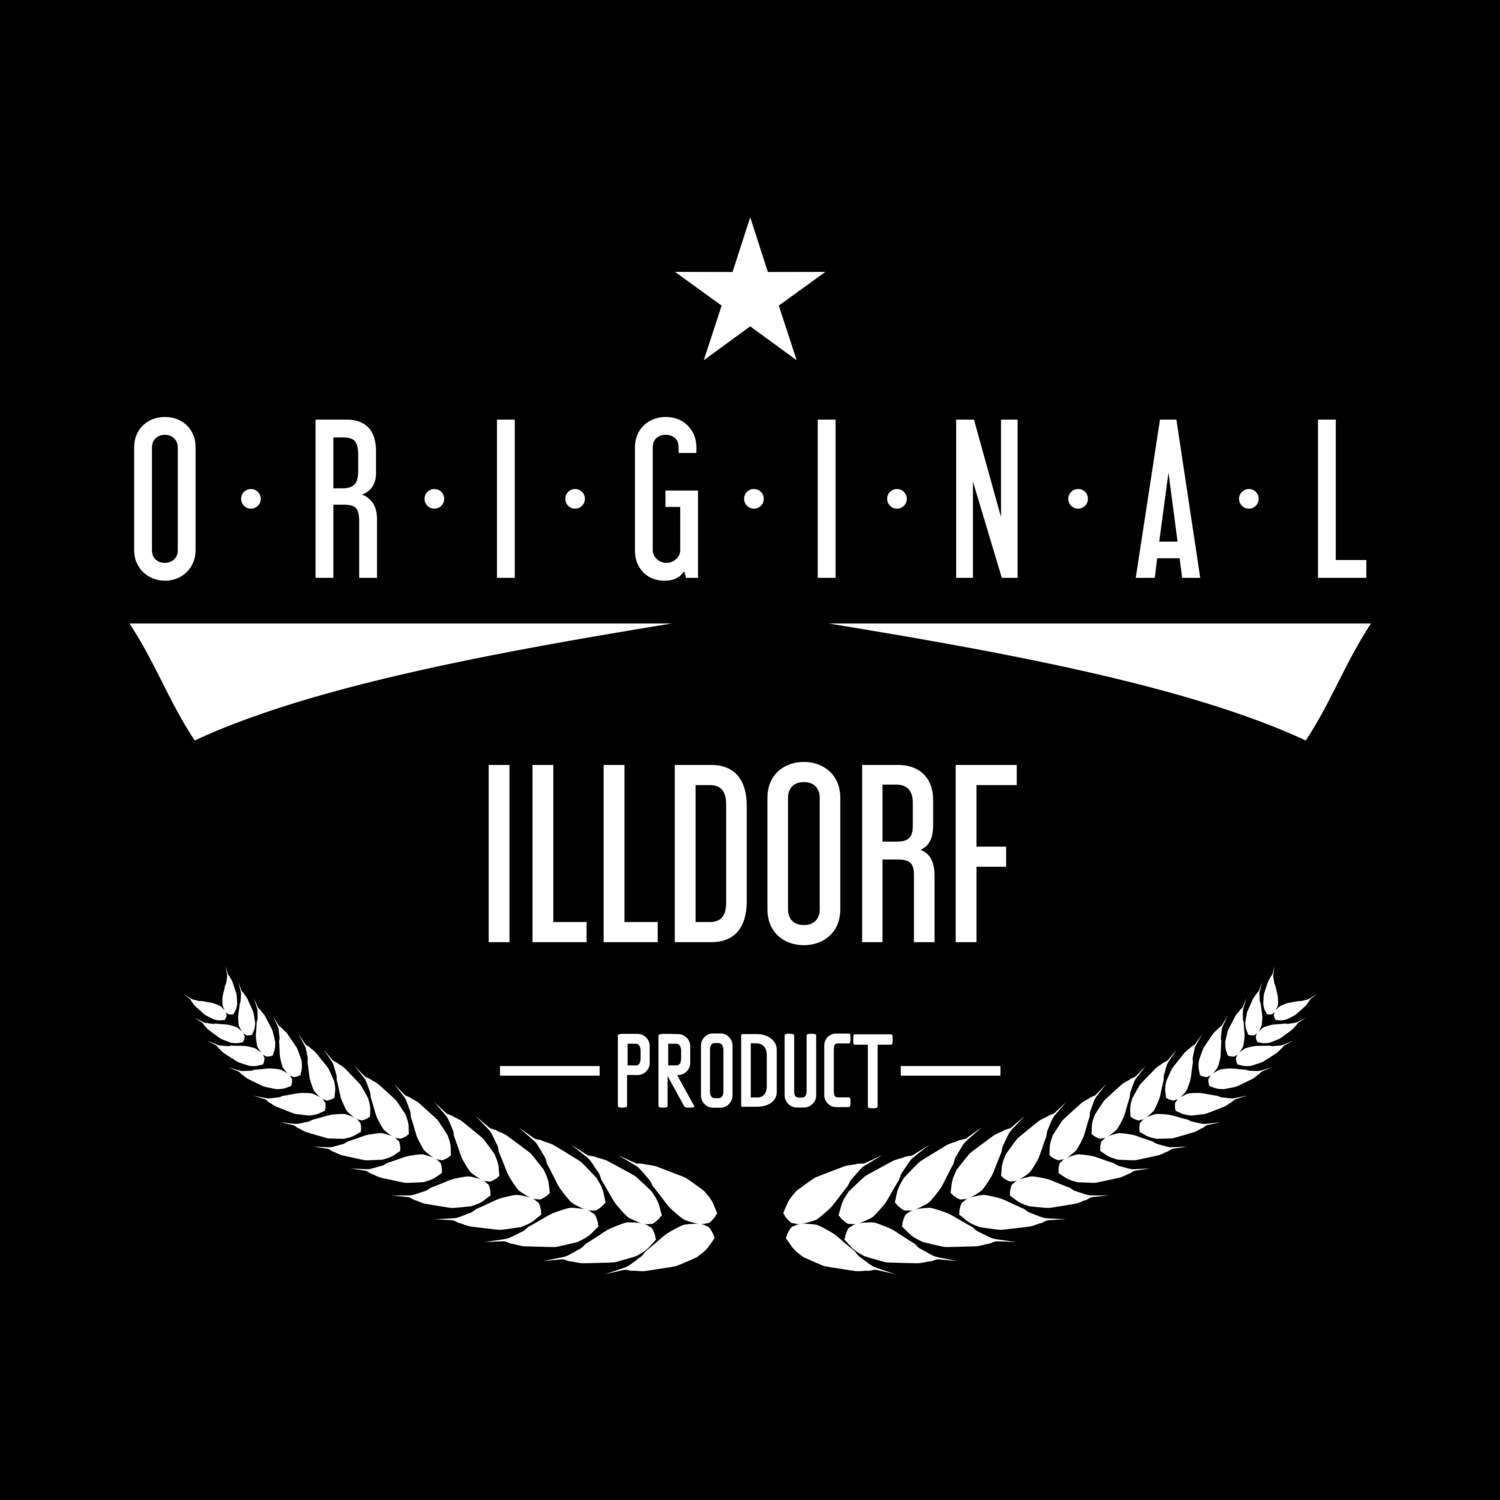 Illdorf T-Shirt »Original Product«